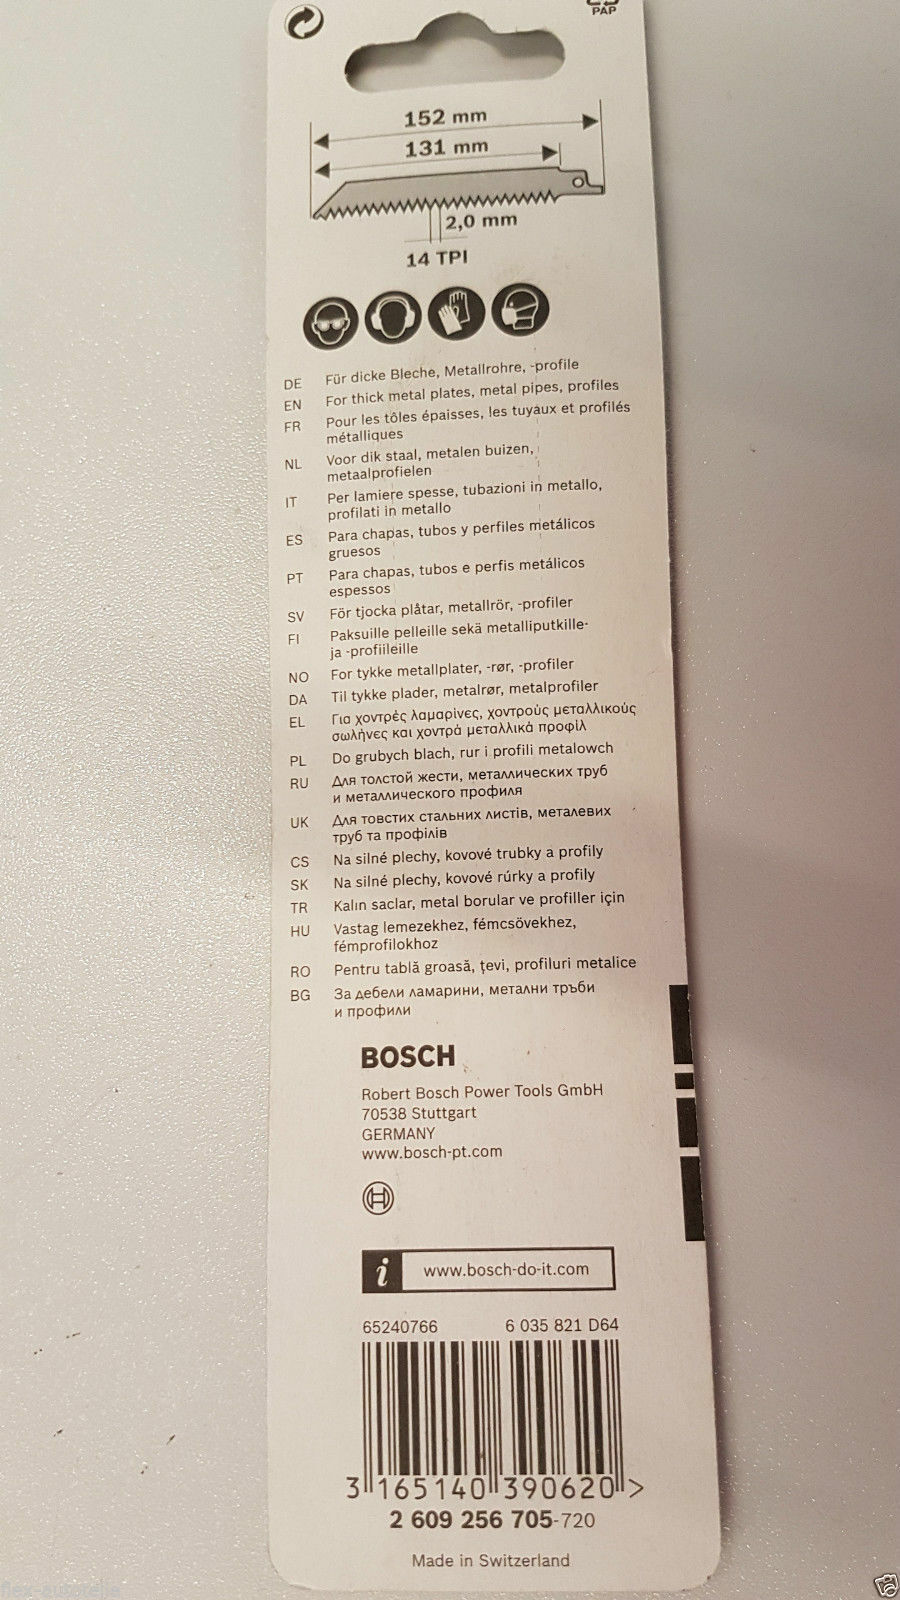 2 Stk. Bosch Sägeblatt Säbelsäge Tigersäge METALL 150mm 14TPI 3-8mm dicke Bleche - Flex-Autoteile